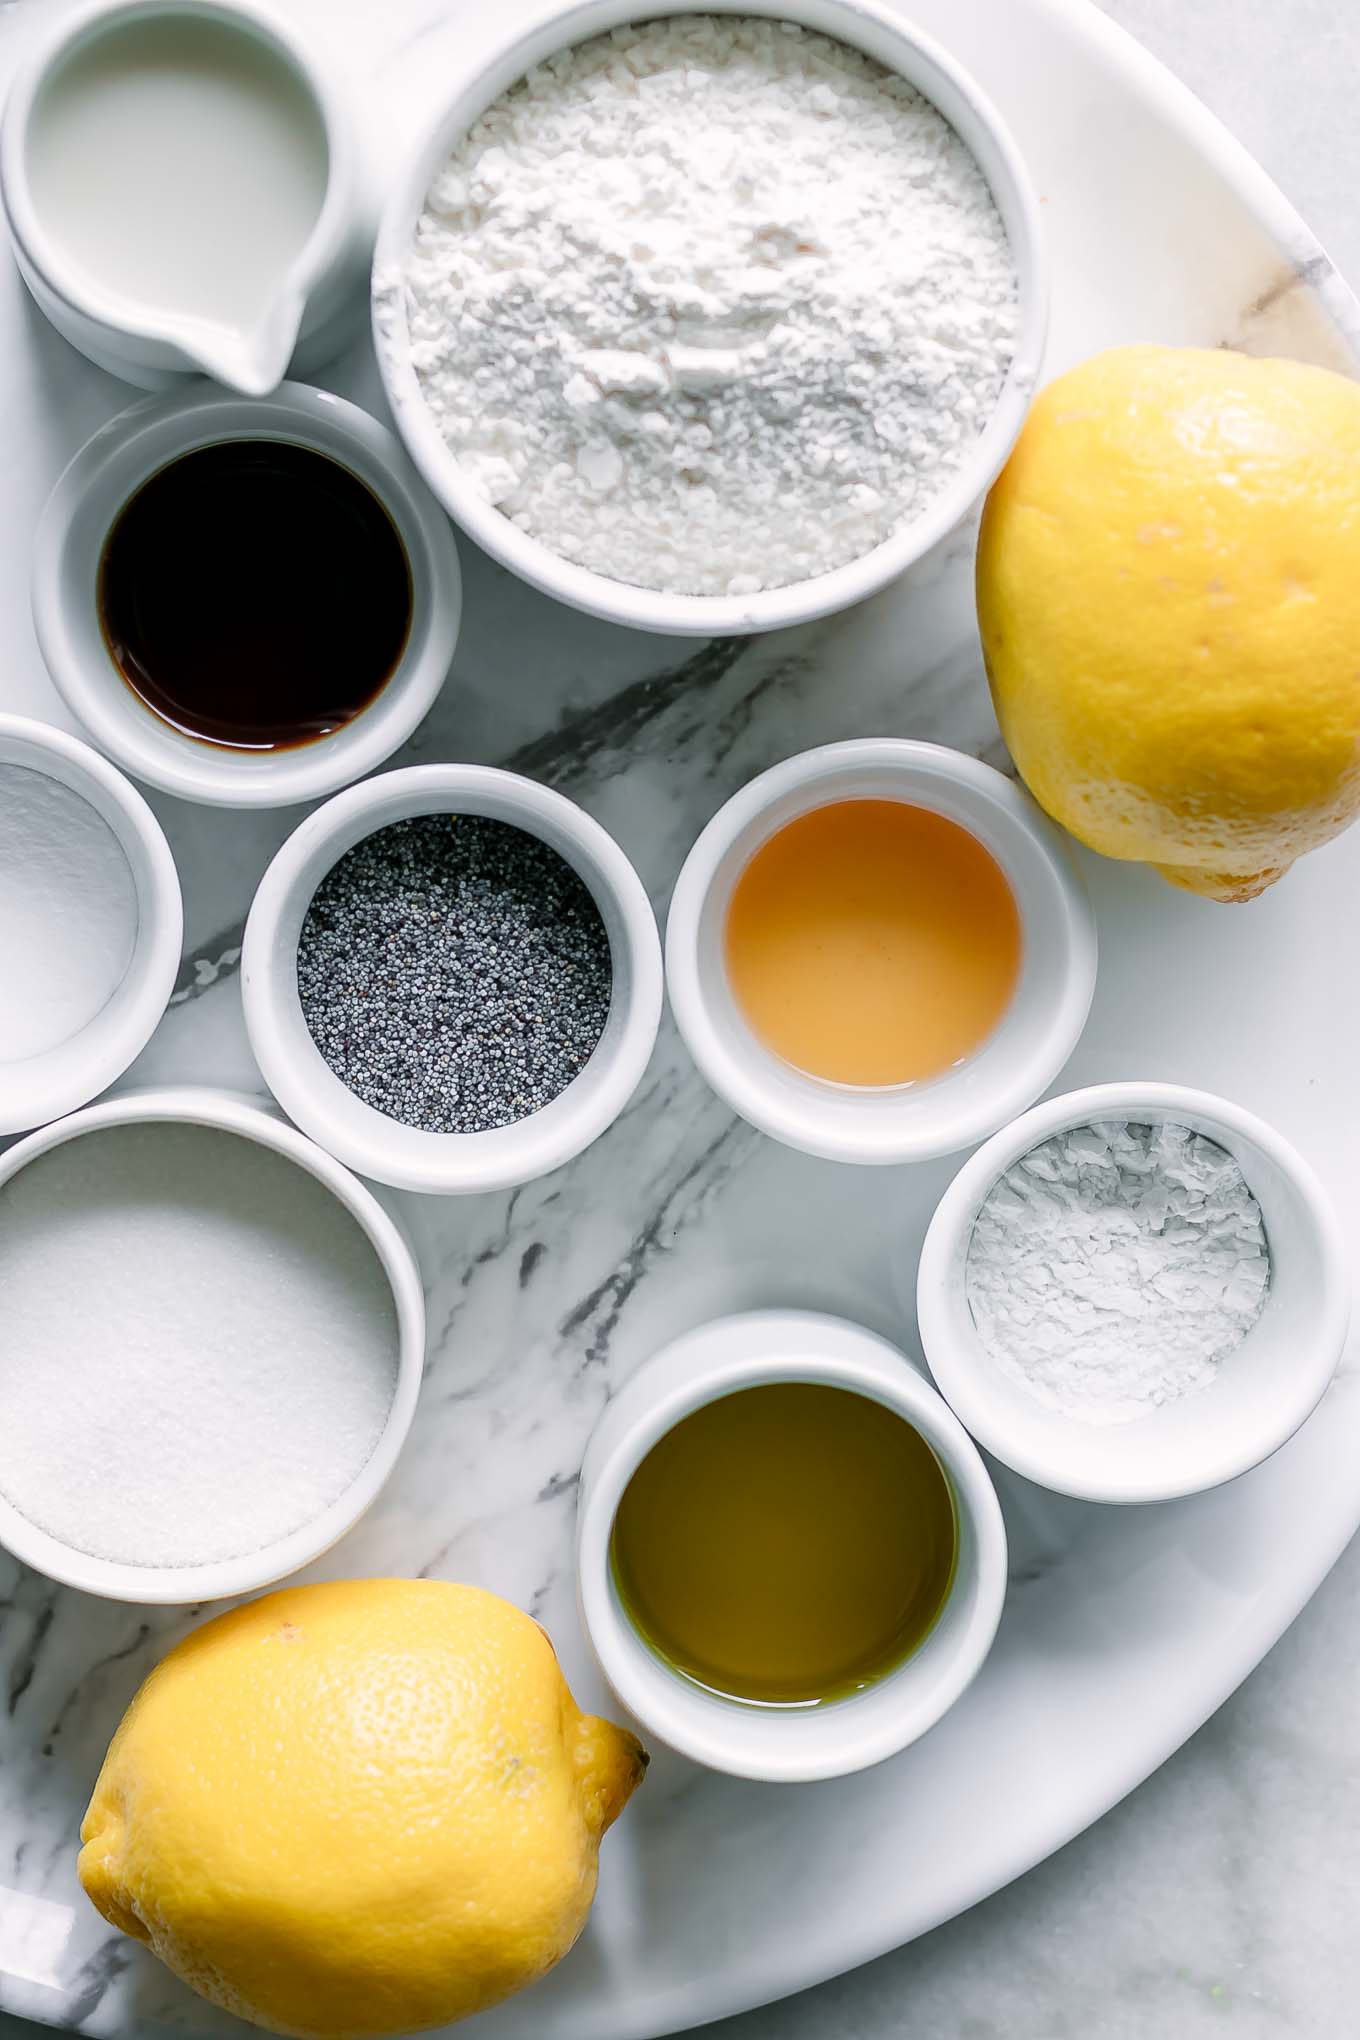 bowls of flour, lemon zest, poppyseeds, baking soda, baking powder, and other ingredients for muffins